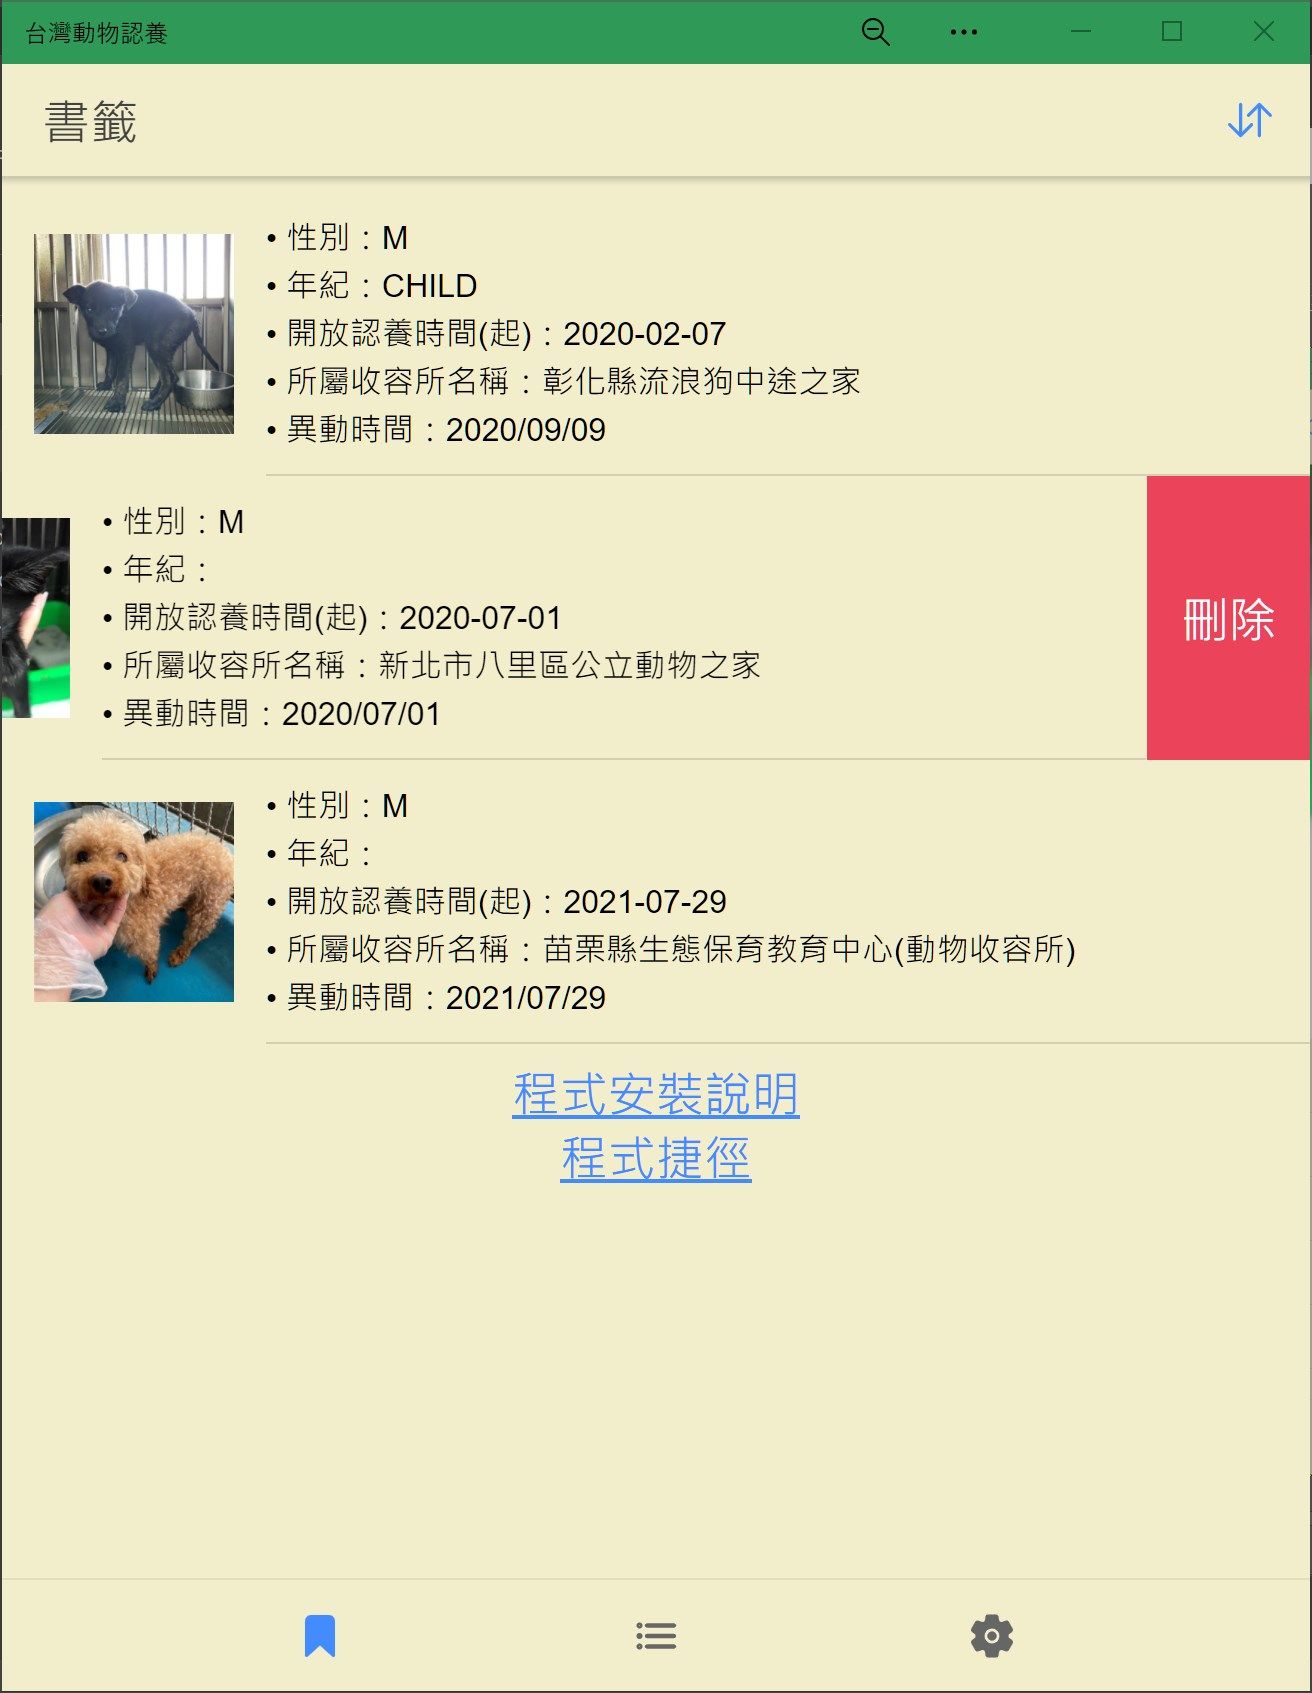 Taiwan Animal Adoption